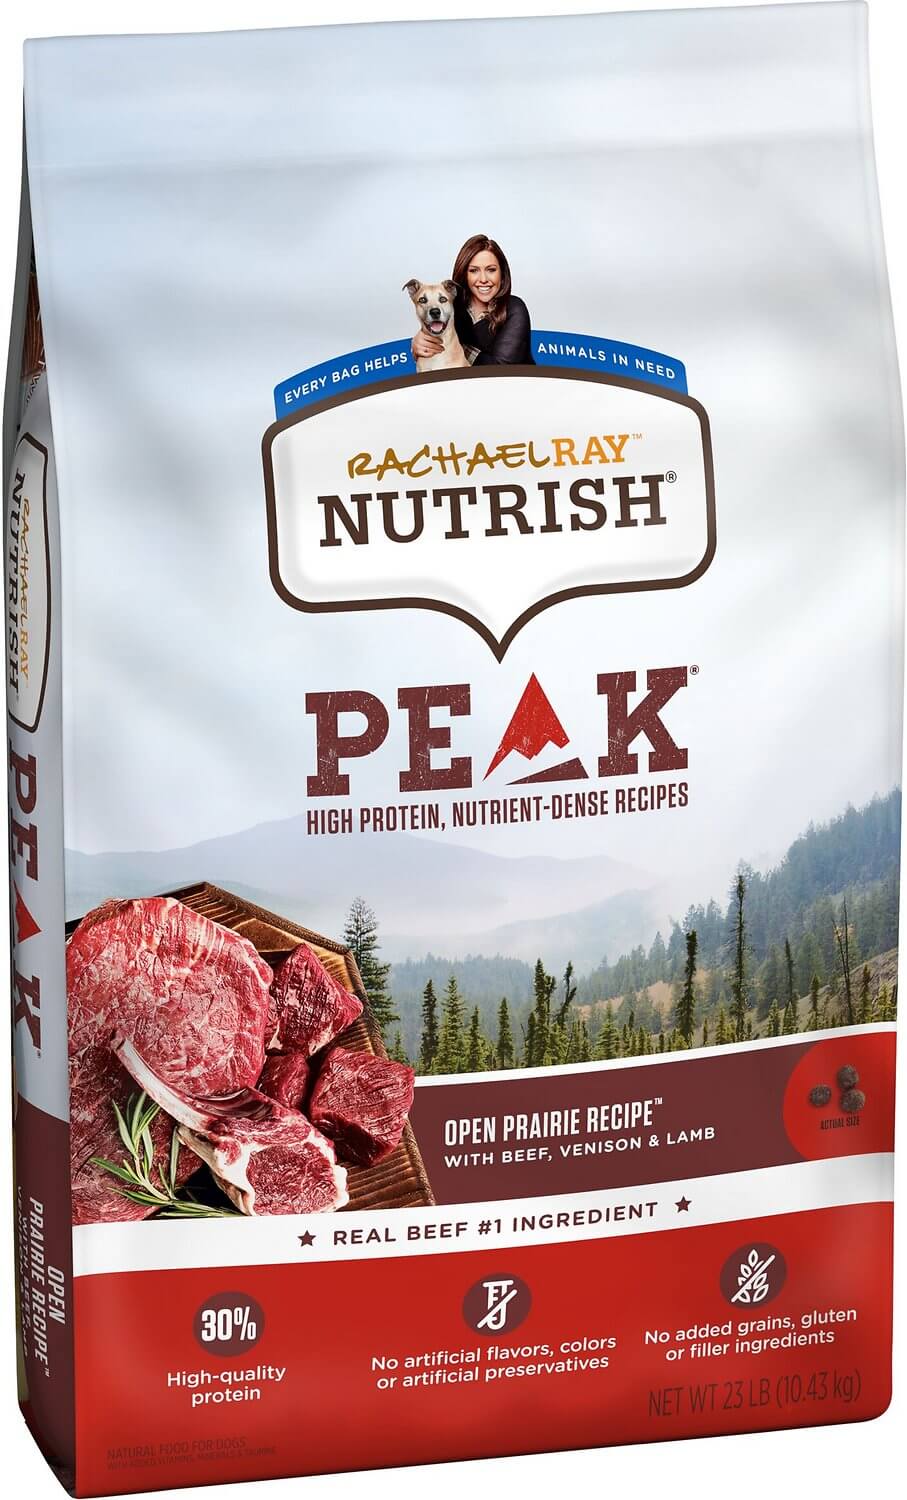 Rachael Ray Nutrish Peak Dog Food Review (Dry)